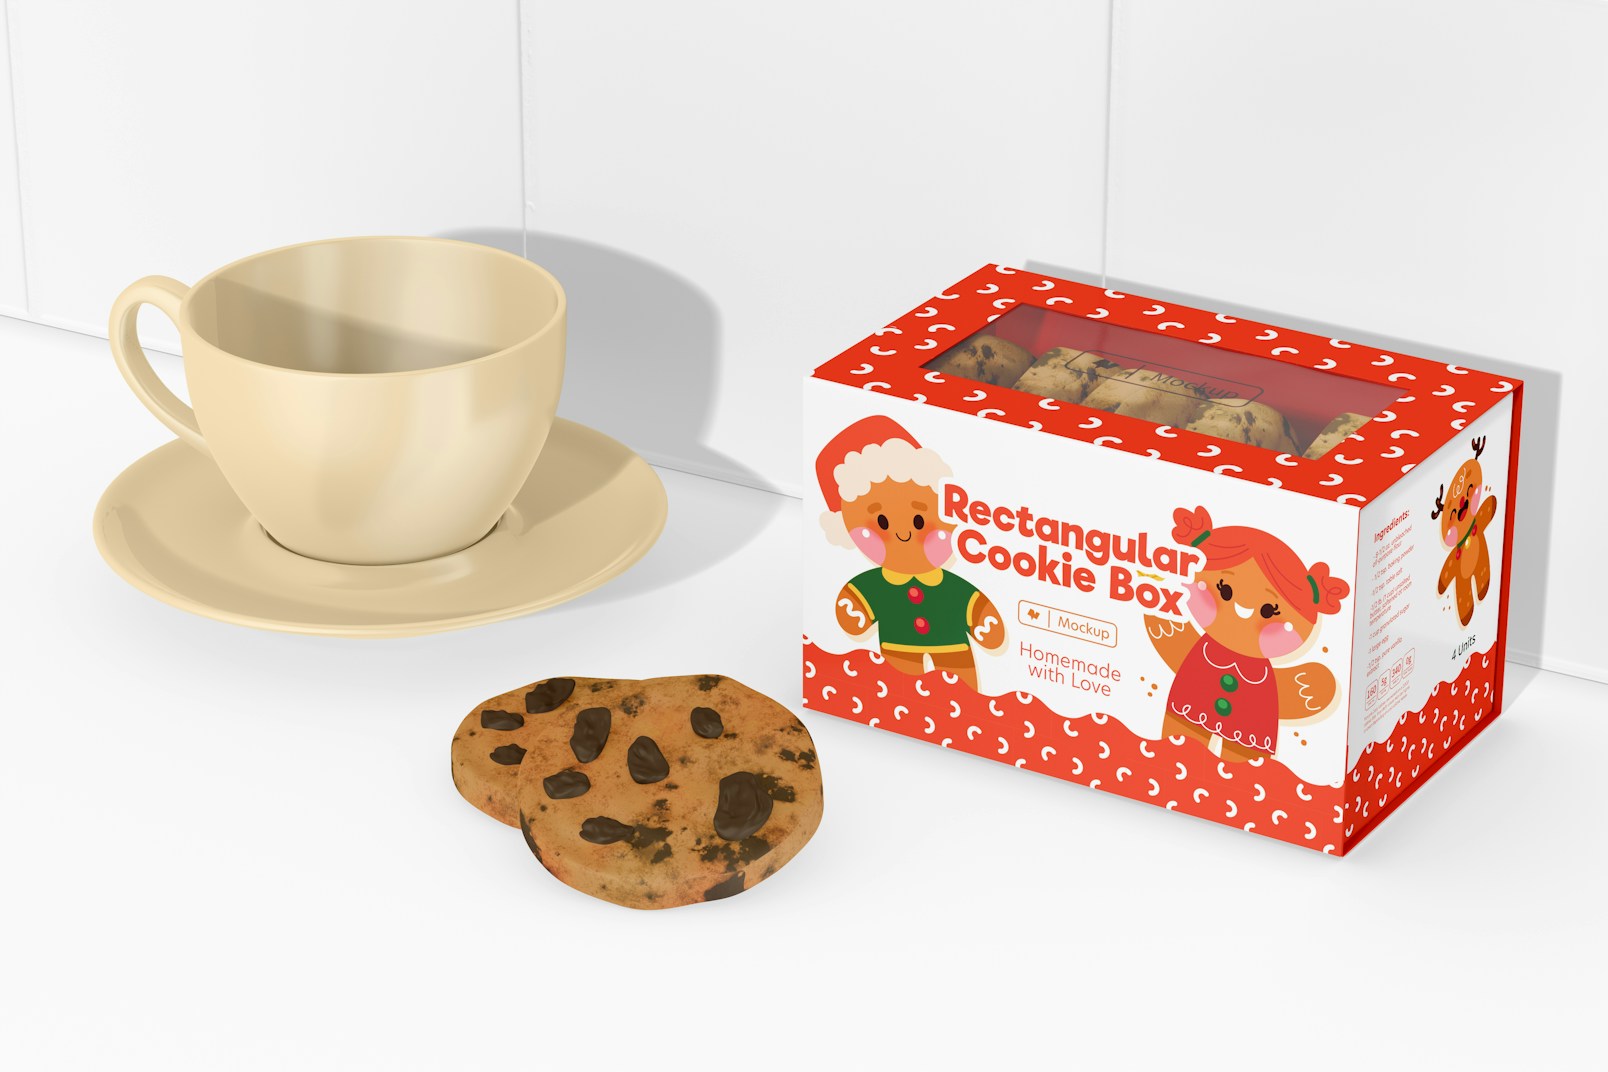 Rectangular Cookie Box Mockup, with Mug